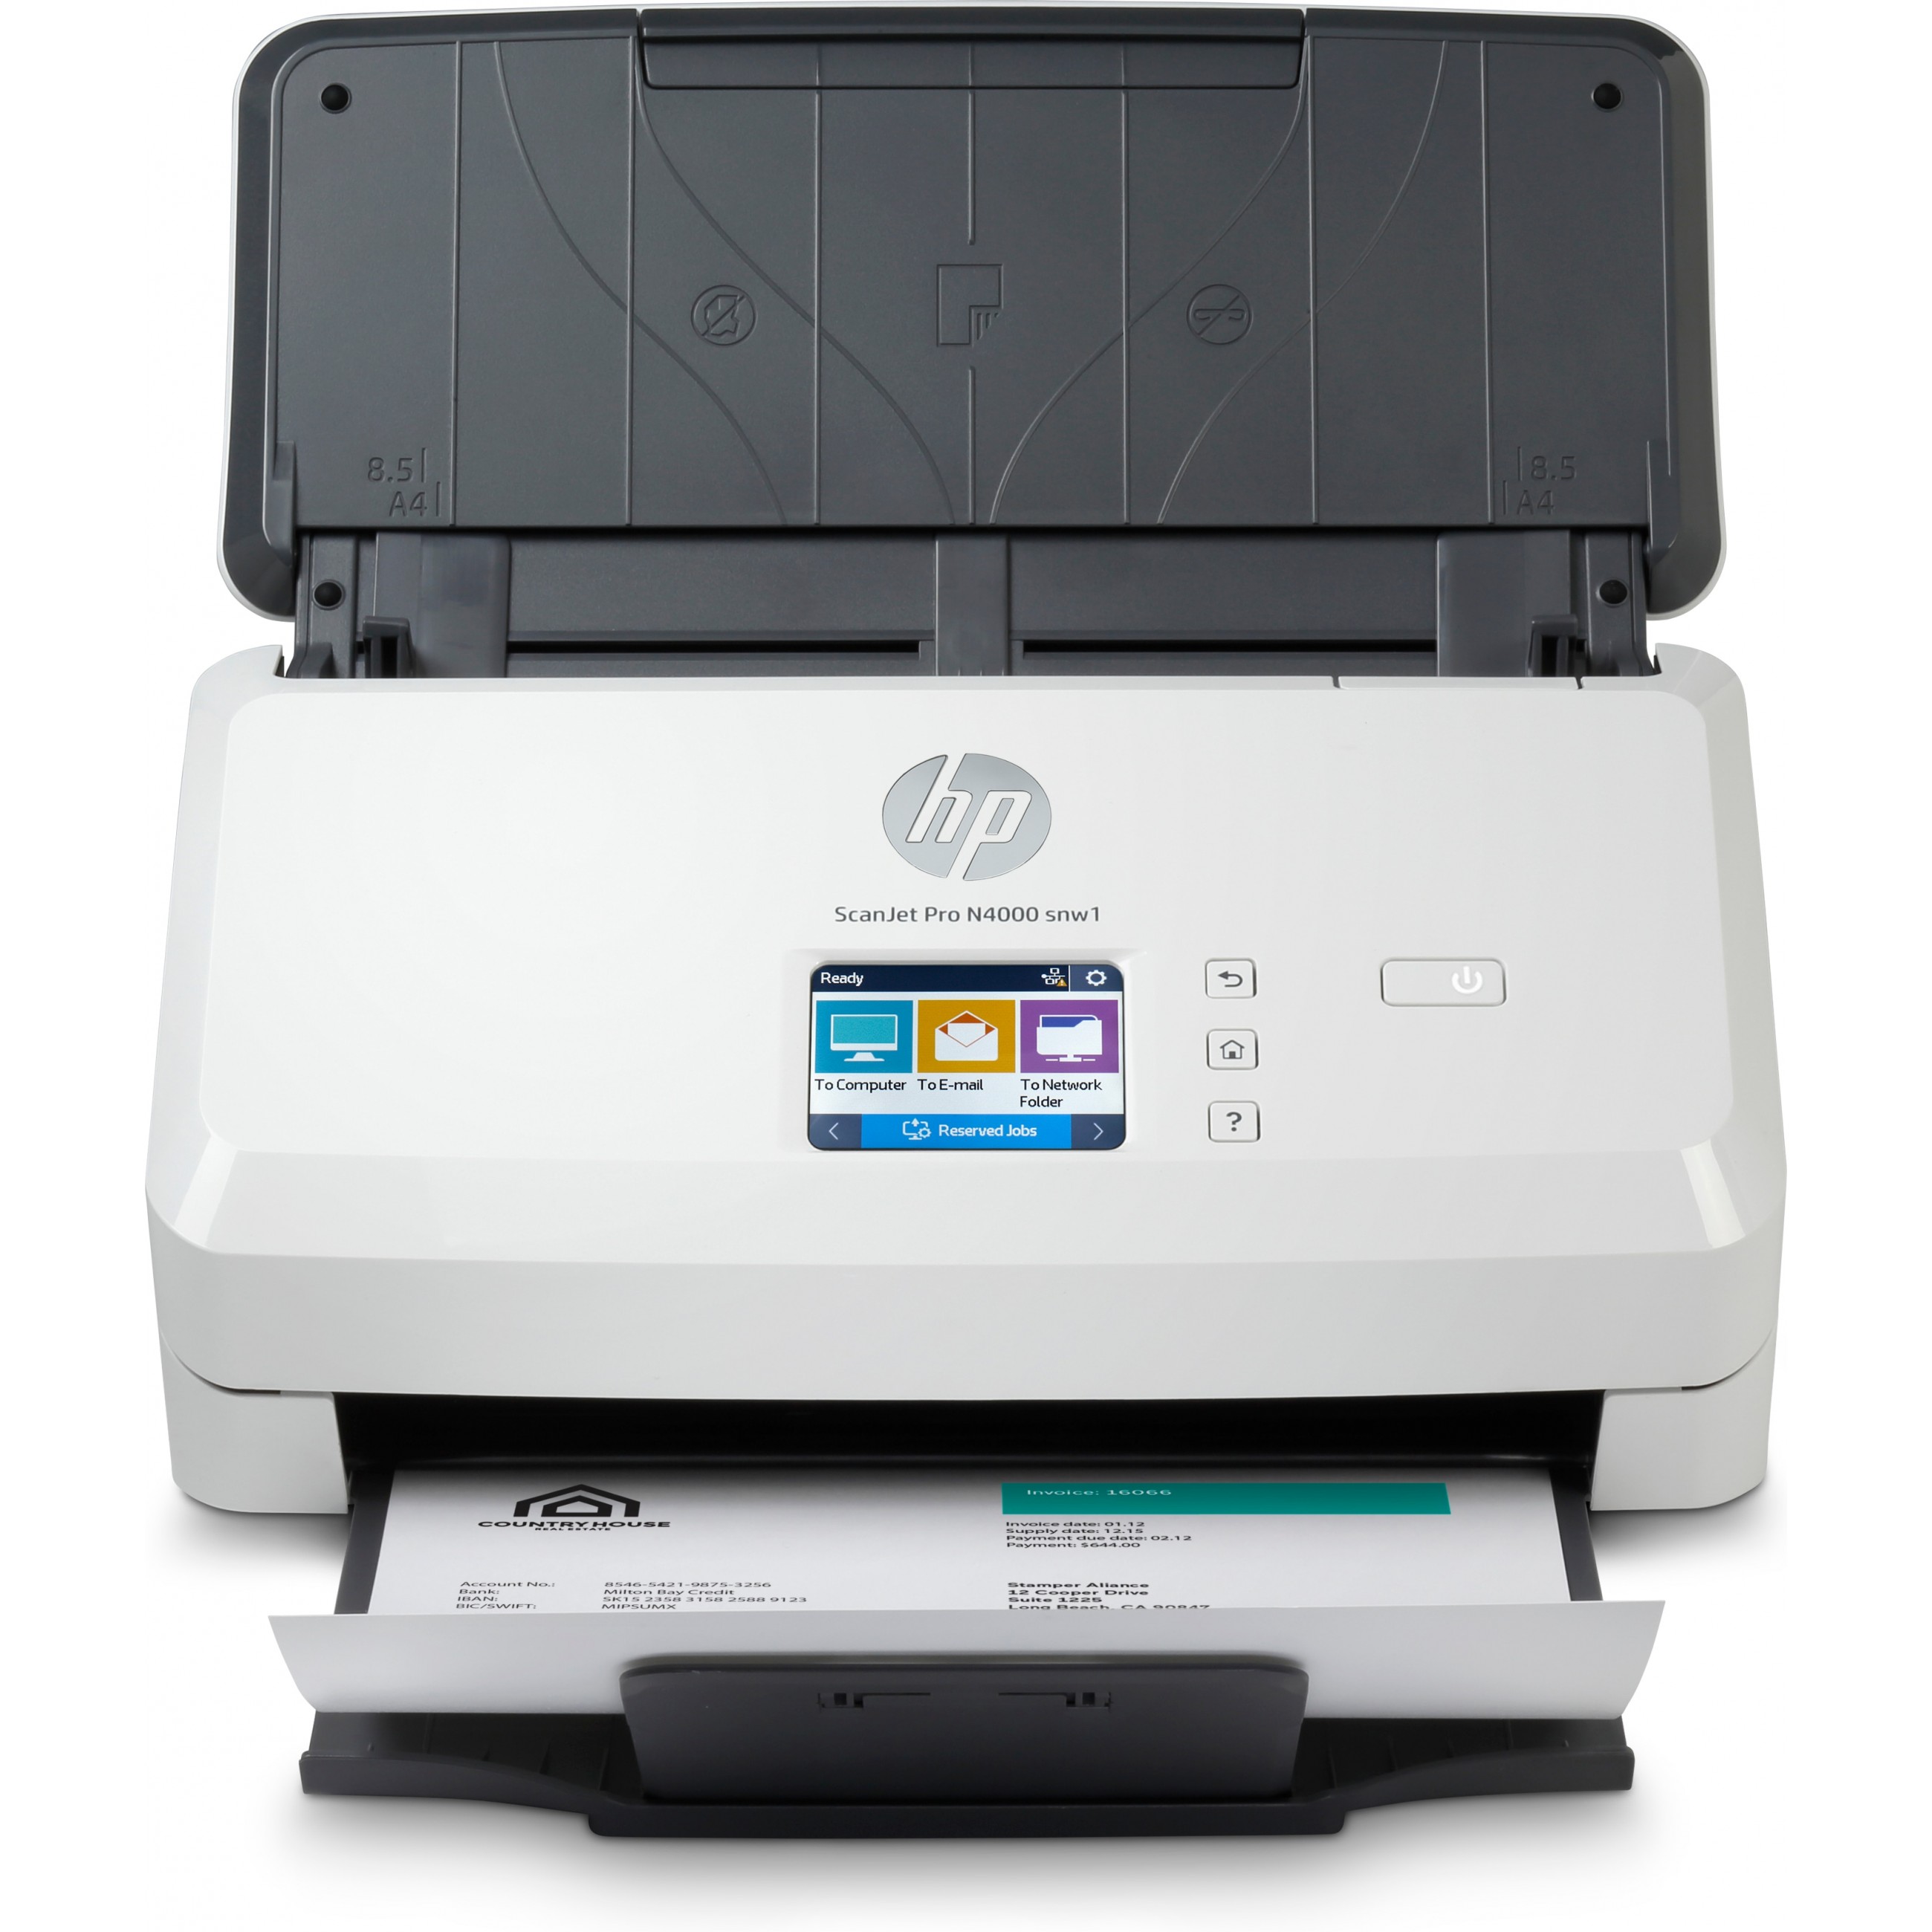 HP Scanjet Pro N4000 snw1 Sheet-feed Scanner - 6FW08A#B19